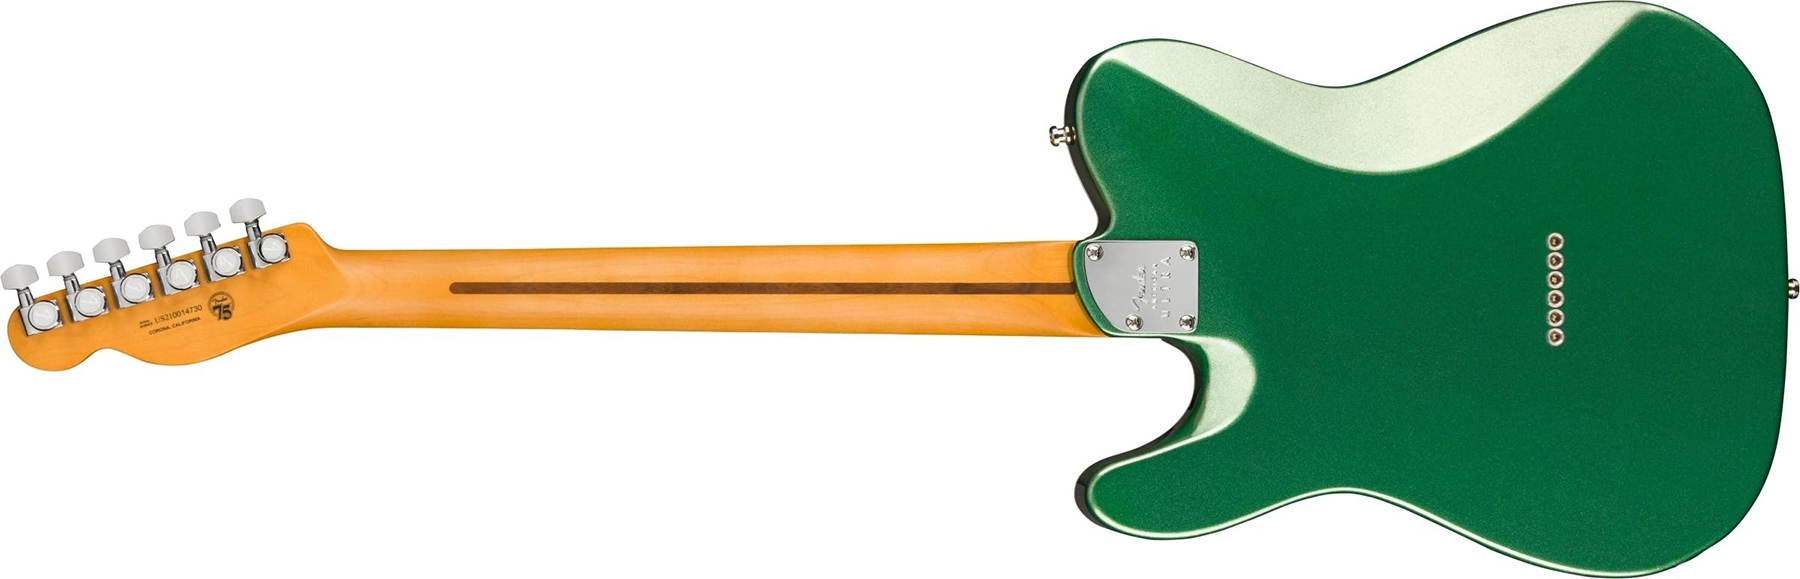 Fender Tele American Ultra Fsr Ltd Usa 2s Ht Eb - Mystic Pine Green - Guitare Électrique Forme Tel - Variation 1